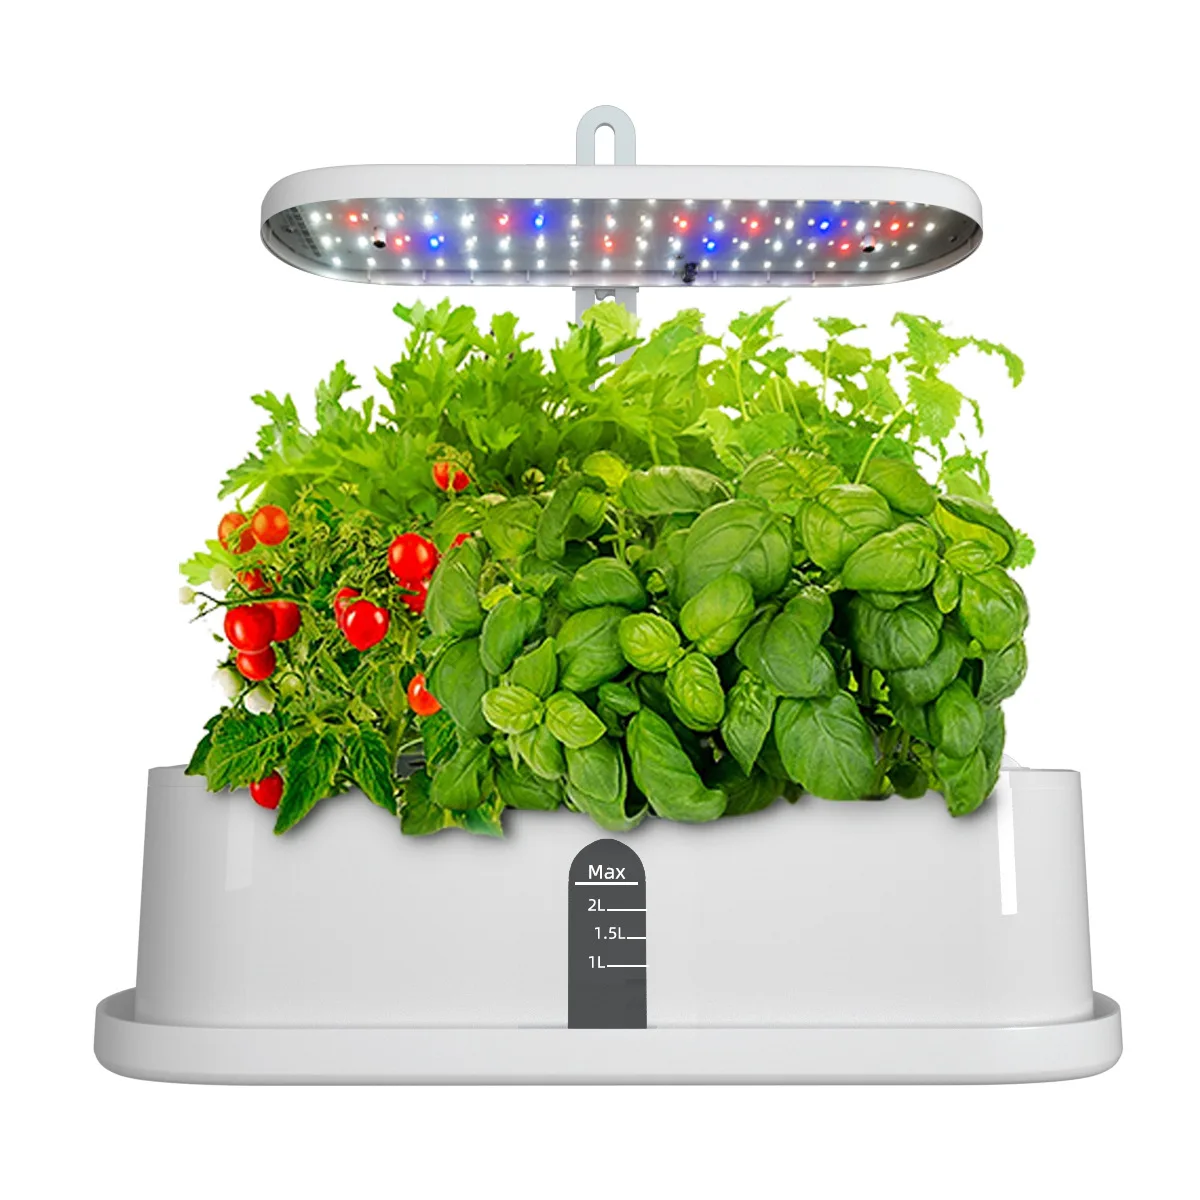 

Smart Planter Indoor Herb Garden Vertical Grow Tower LED Indoor Hydroponics Growing System, White